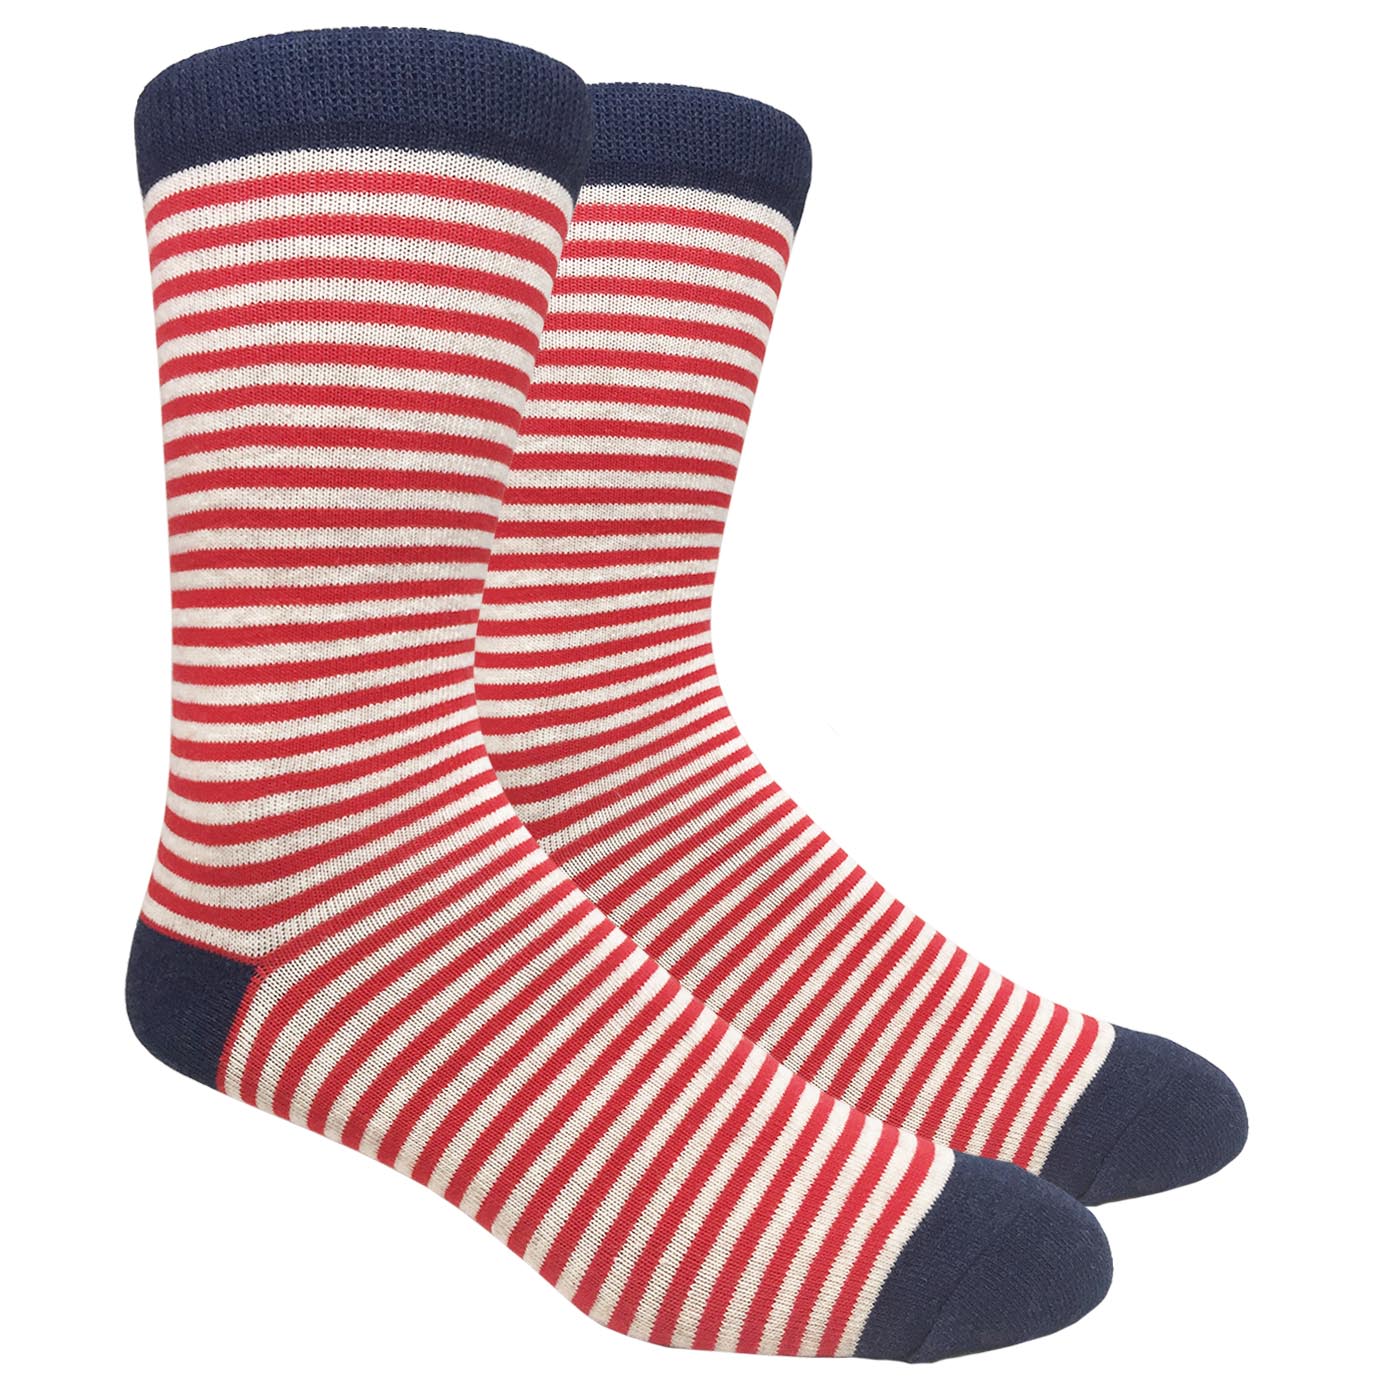 FineFit Black Label Stripe Socks - Tan & Red